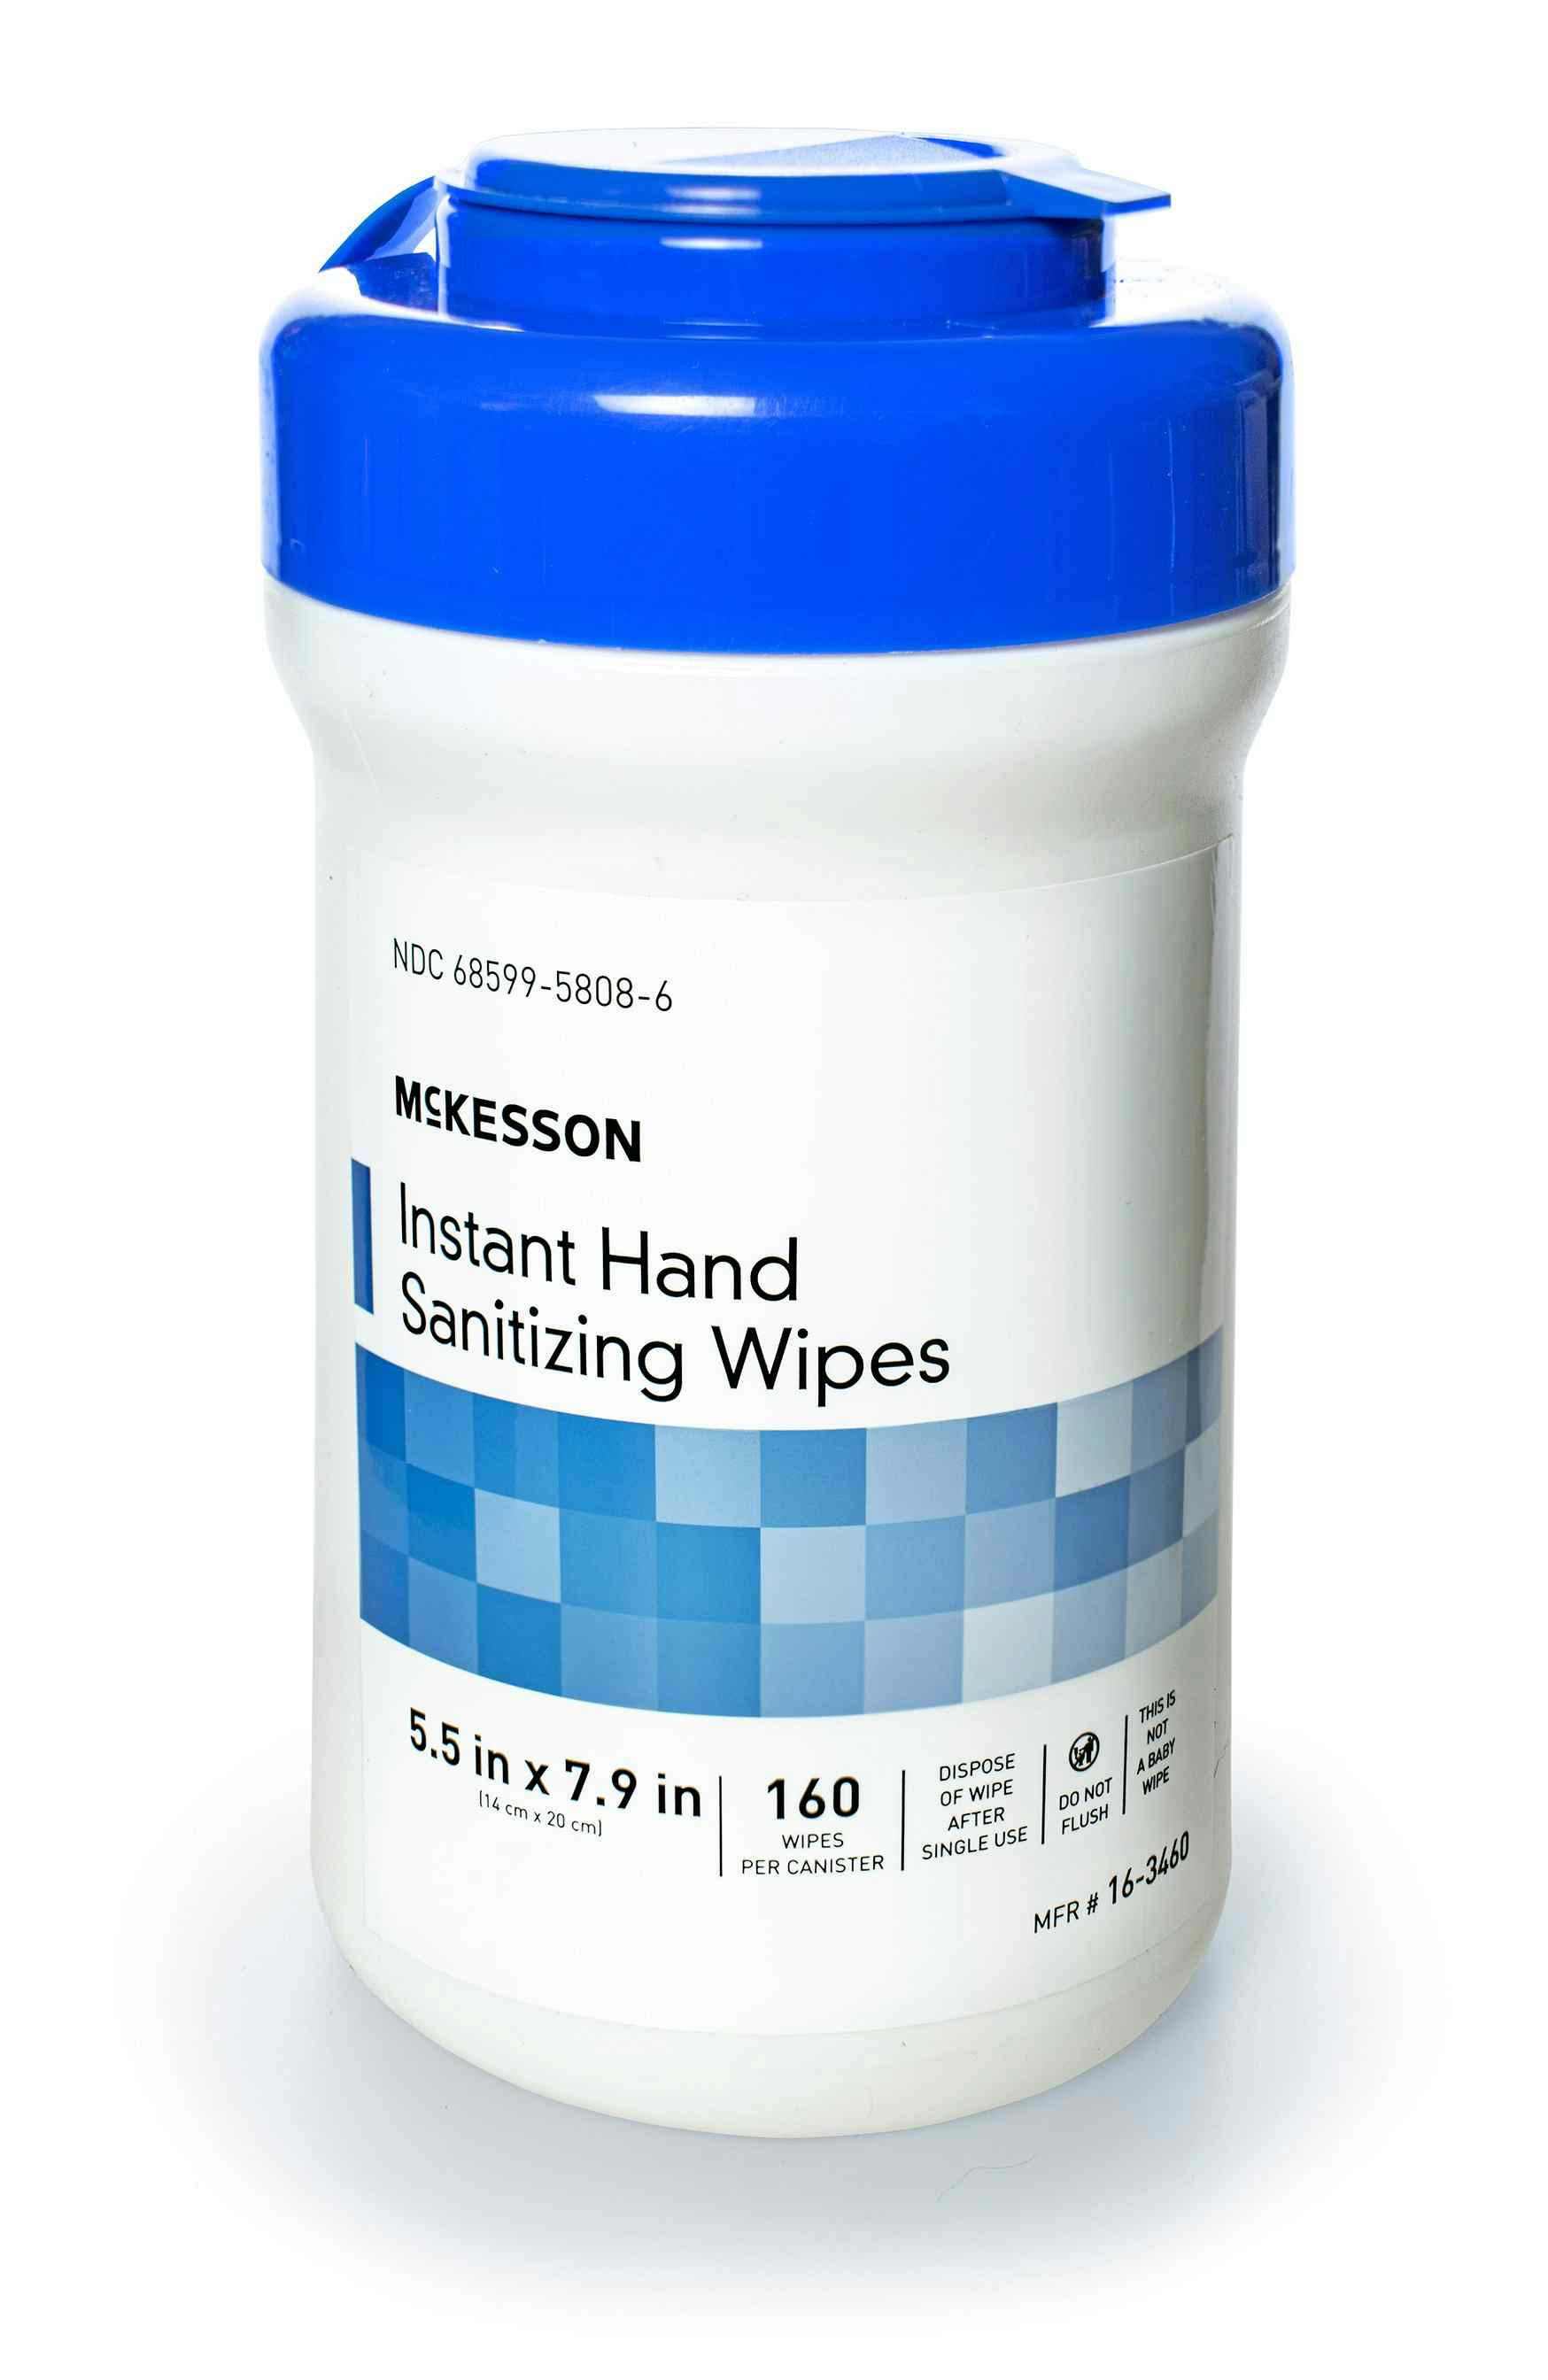 McKesson Instant Hand Sanitizing Wipes, 16-3460, Case of 12